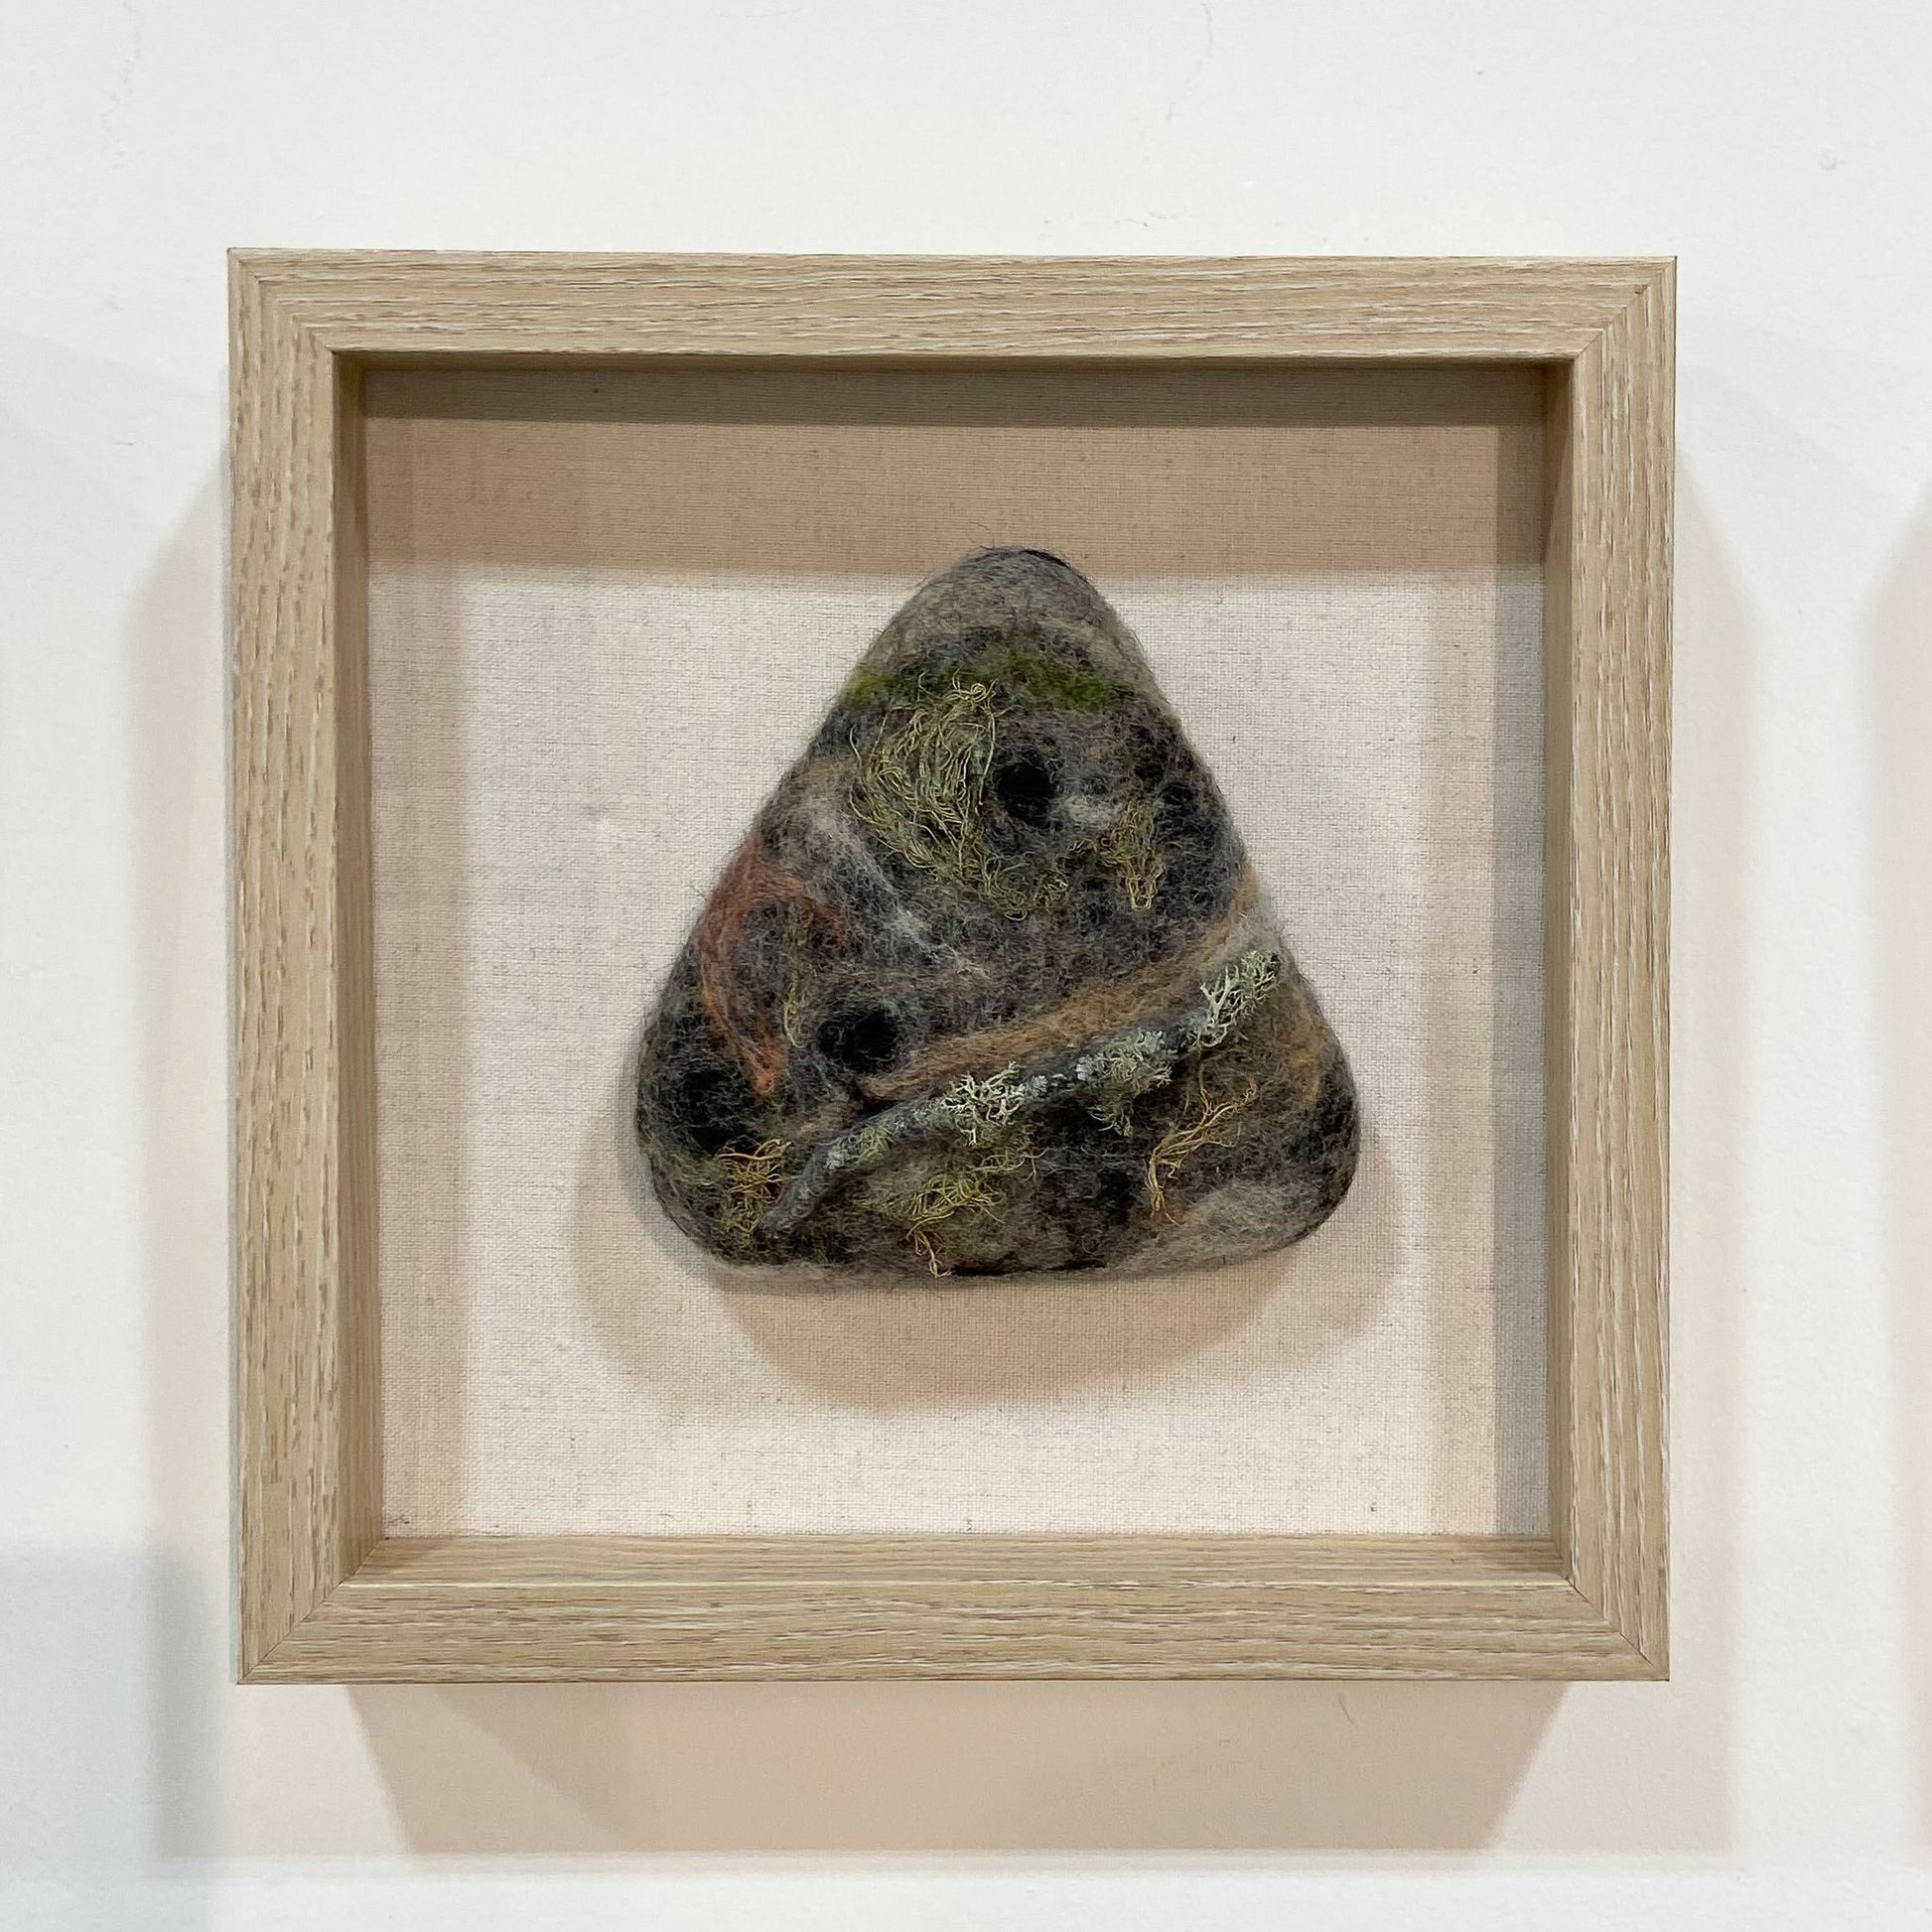 Triangular felted rock in frame